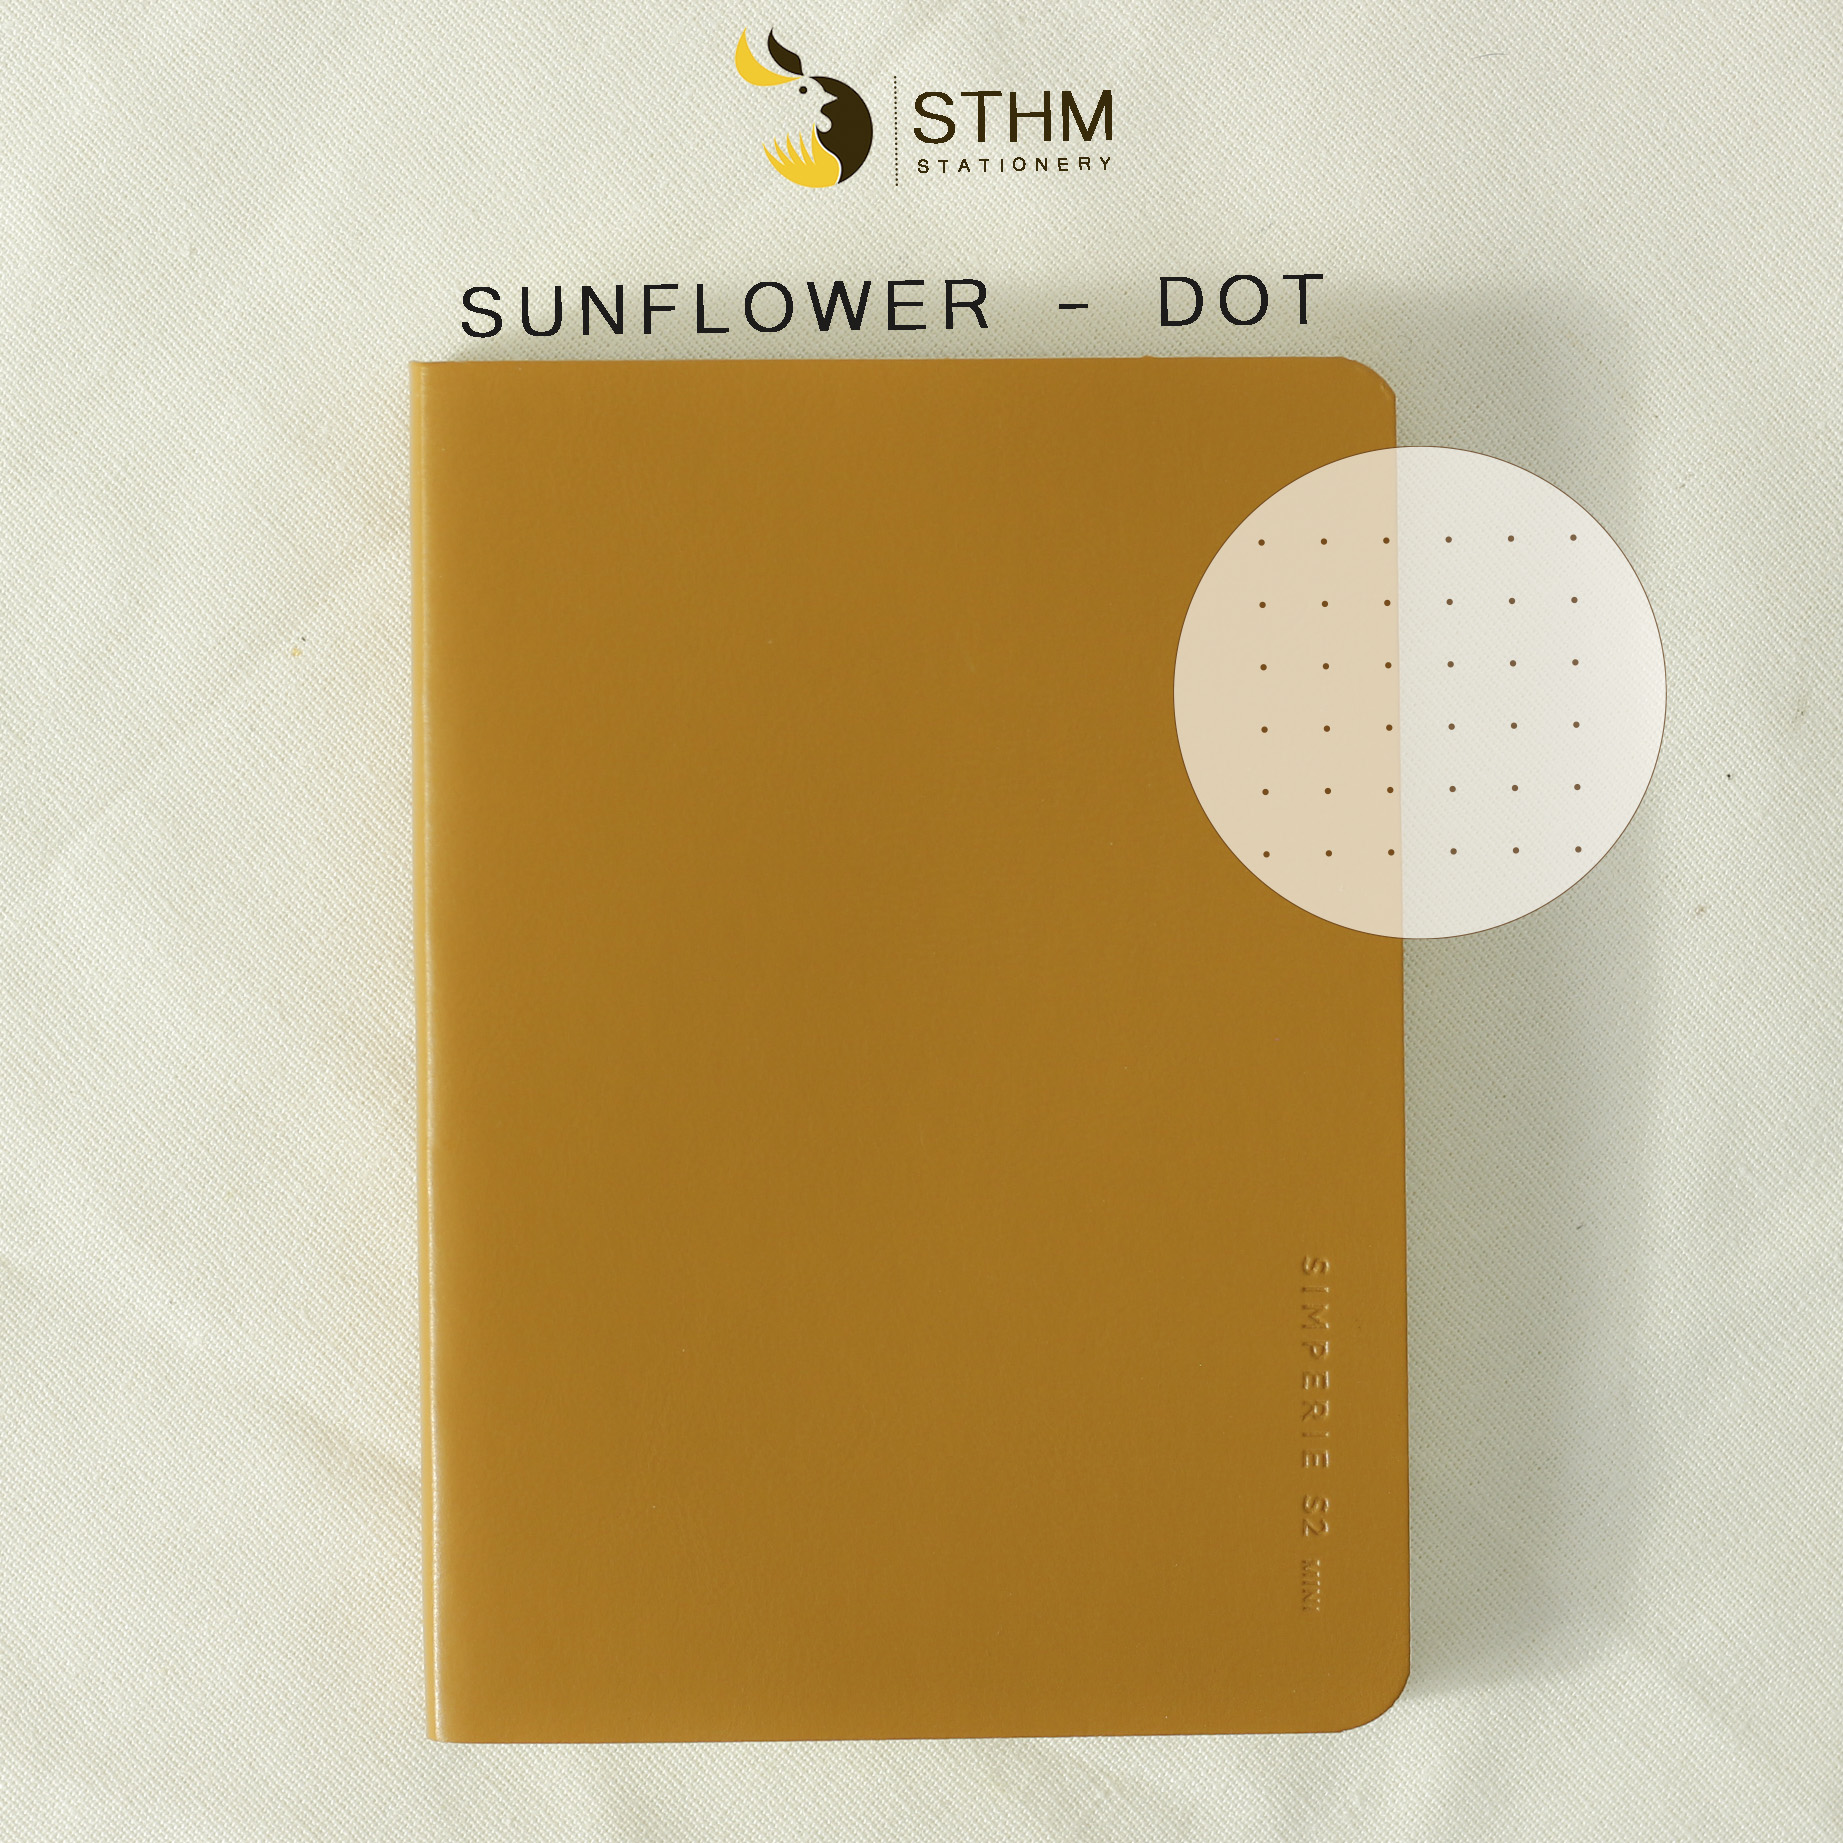 [STHM stationery] - Simperie S2 mini - Ruột dot - 100x140mm - Bìa PU